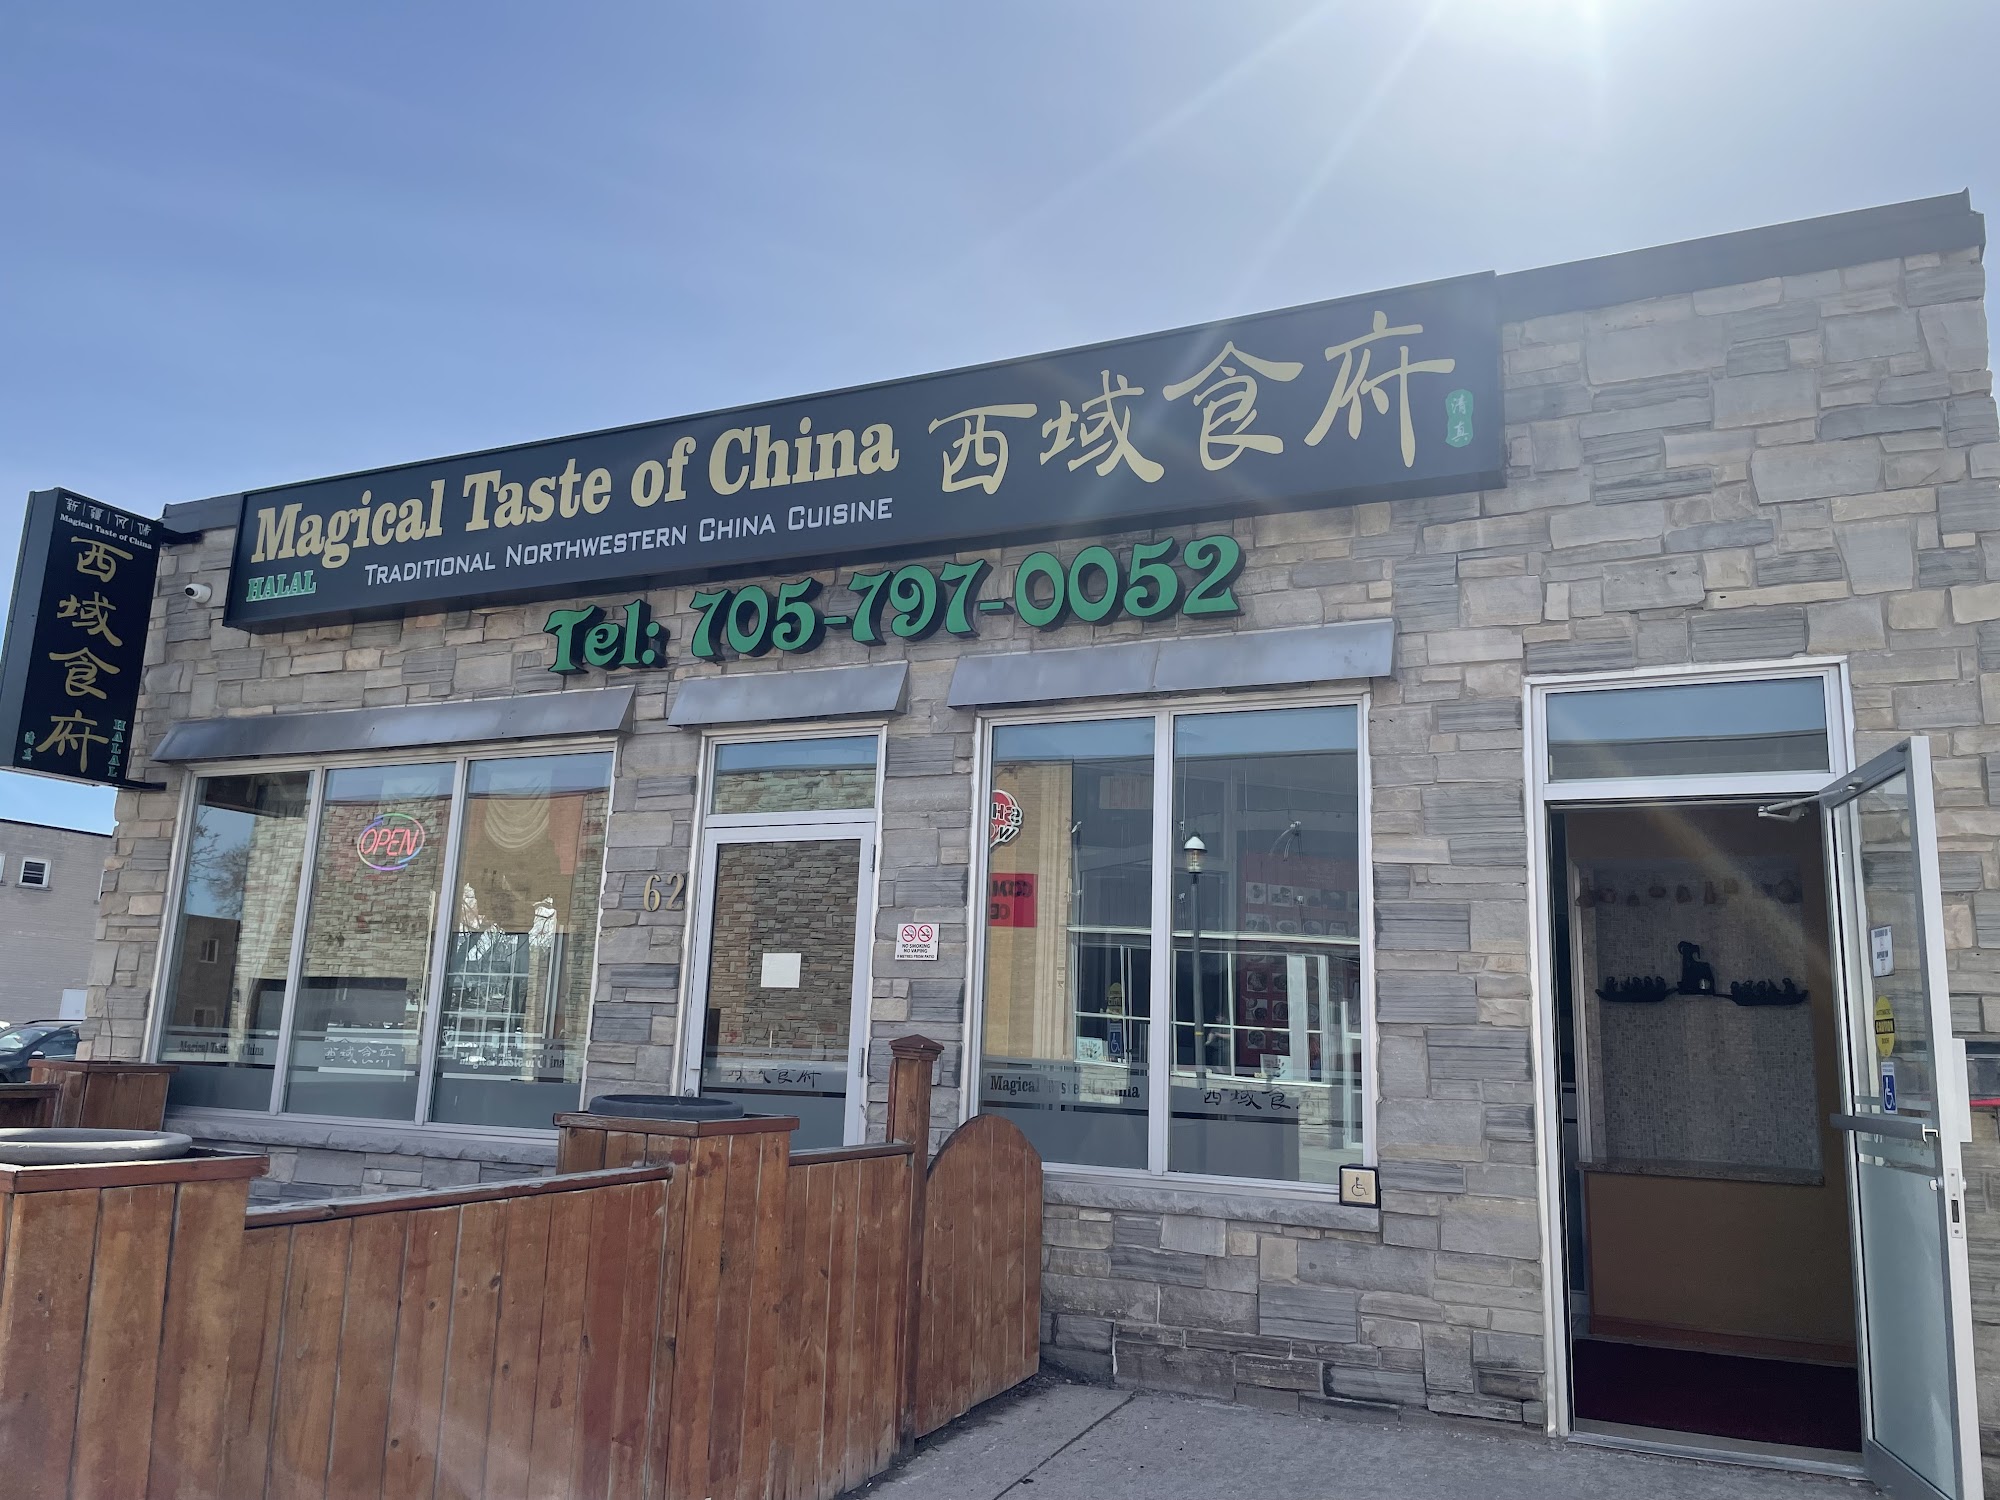 Magical Taste of China·Barrie|西域食府·清真|Chinese Restaurant |Halal Cuisine